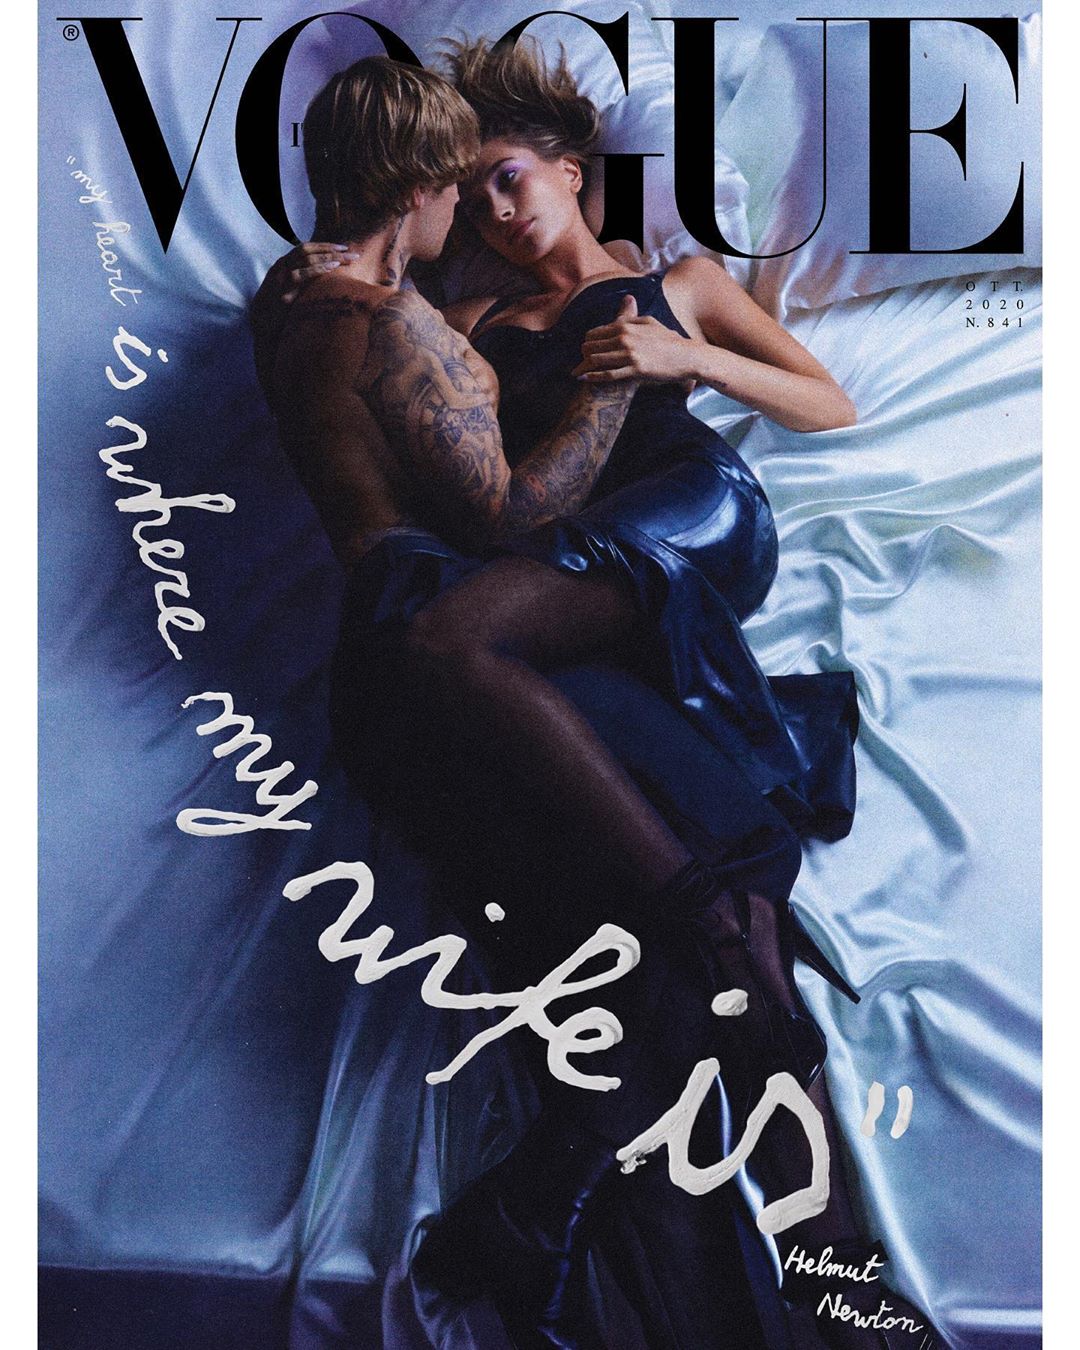 Hailey and Justin Bieber Go Vogue! - Photo 5